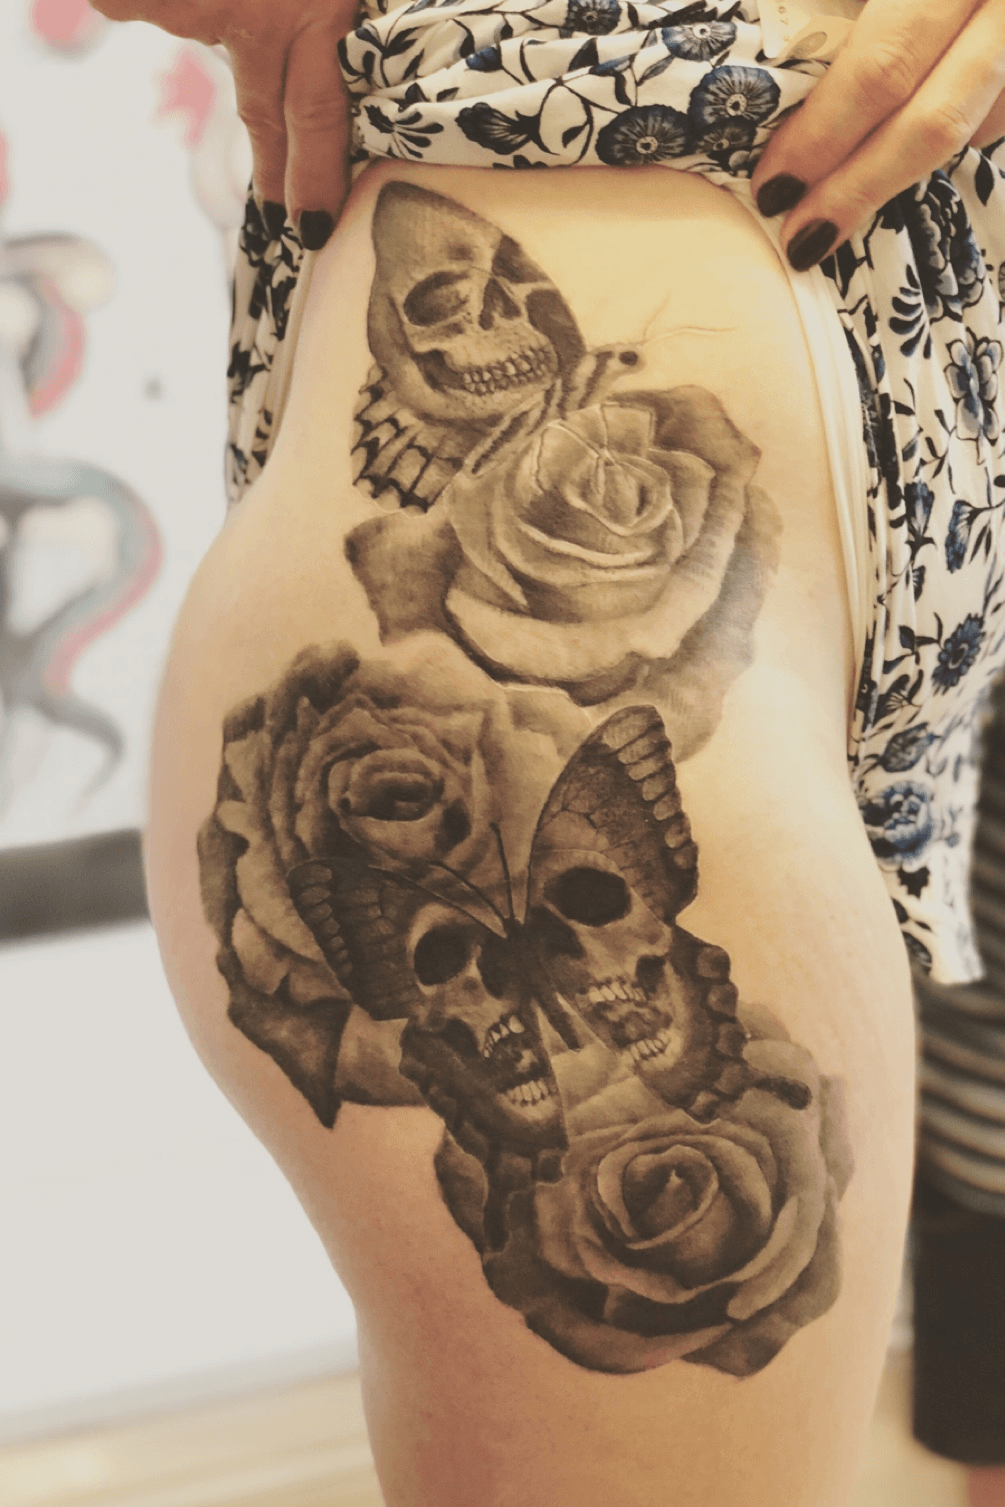 girly skull and roses tattoo